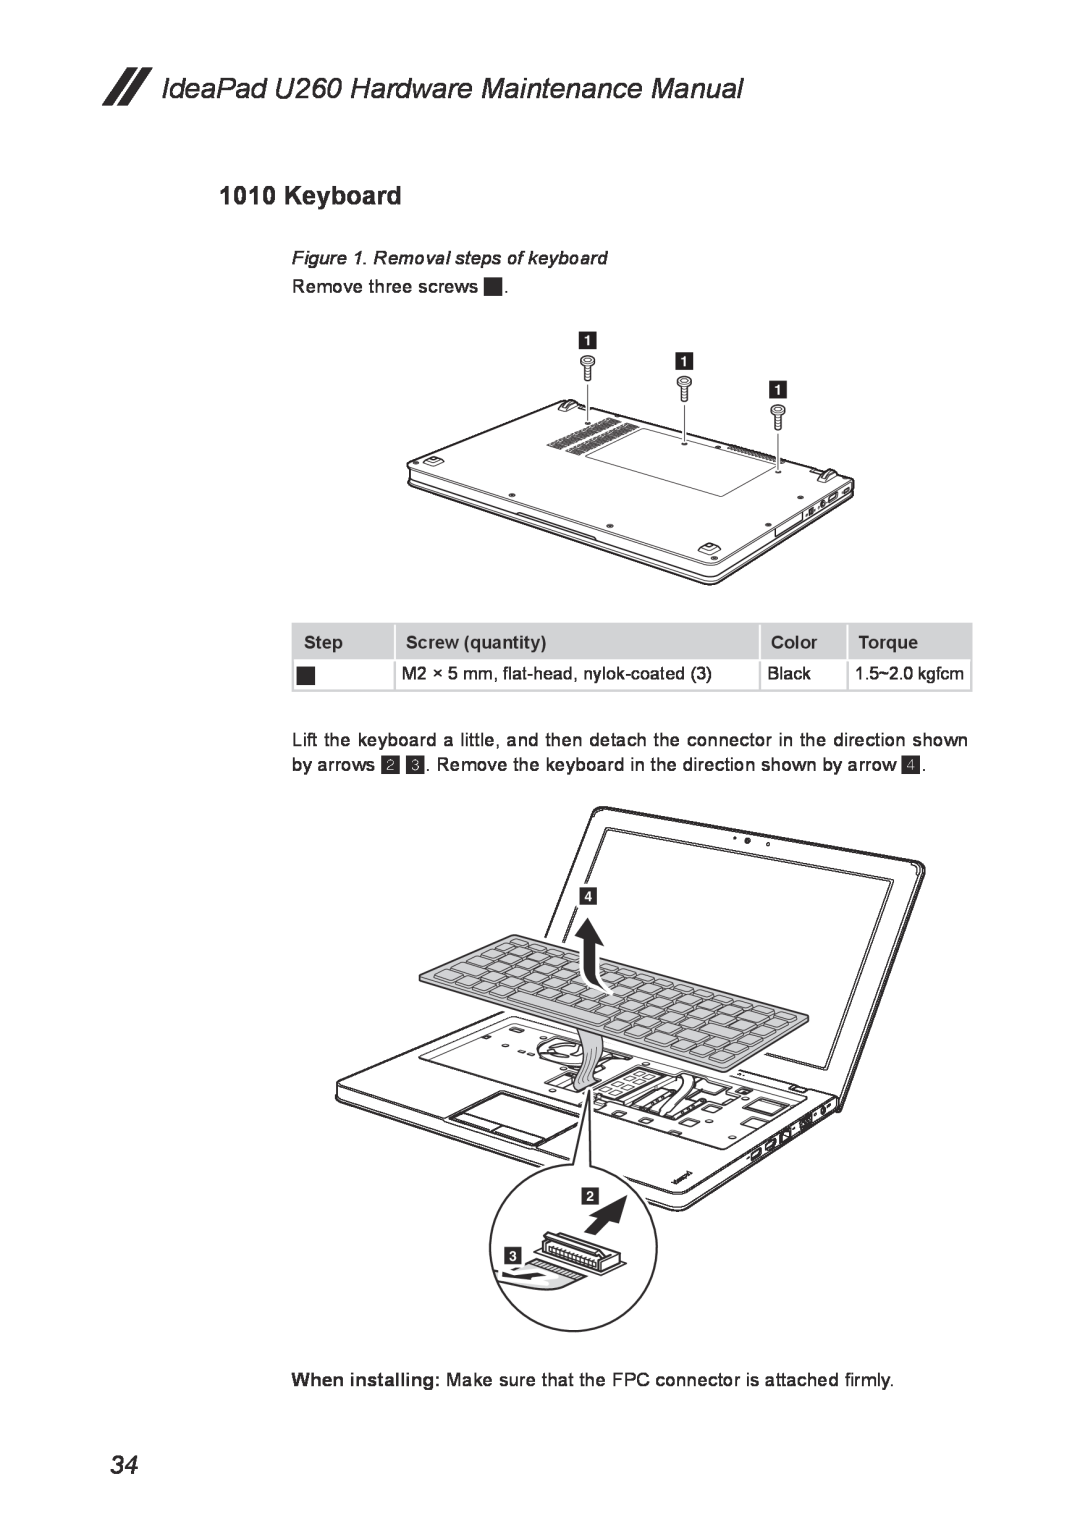 Lenovo manual Keyboard, Removal steps of keyboard, IdeaPad U260 Hardware Maintenance Manual, Step, Screw quantity, Color 